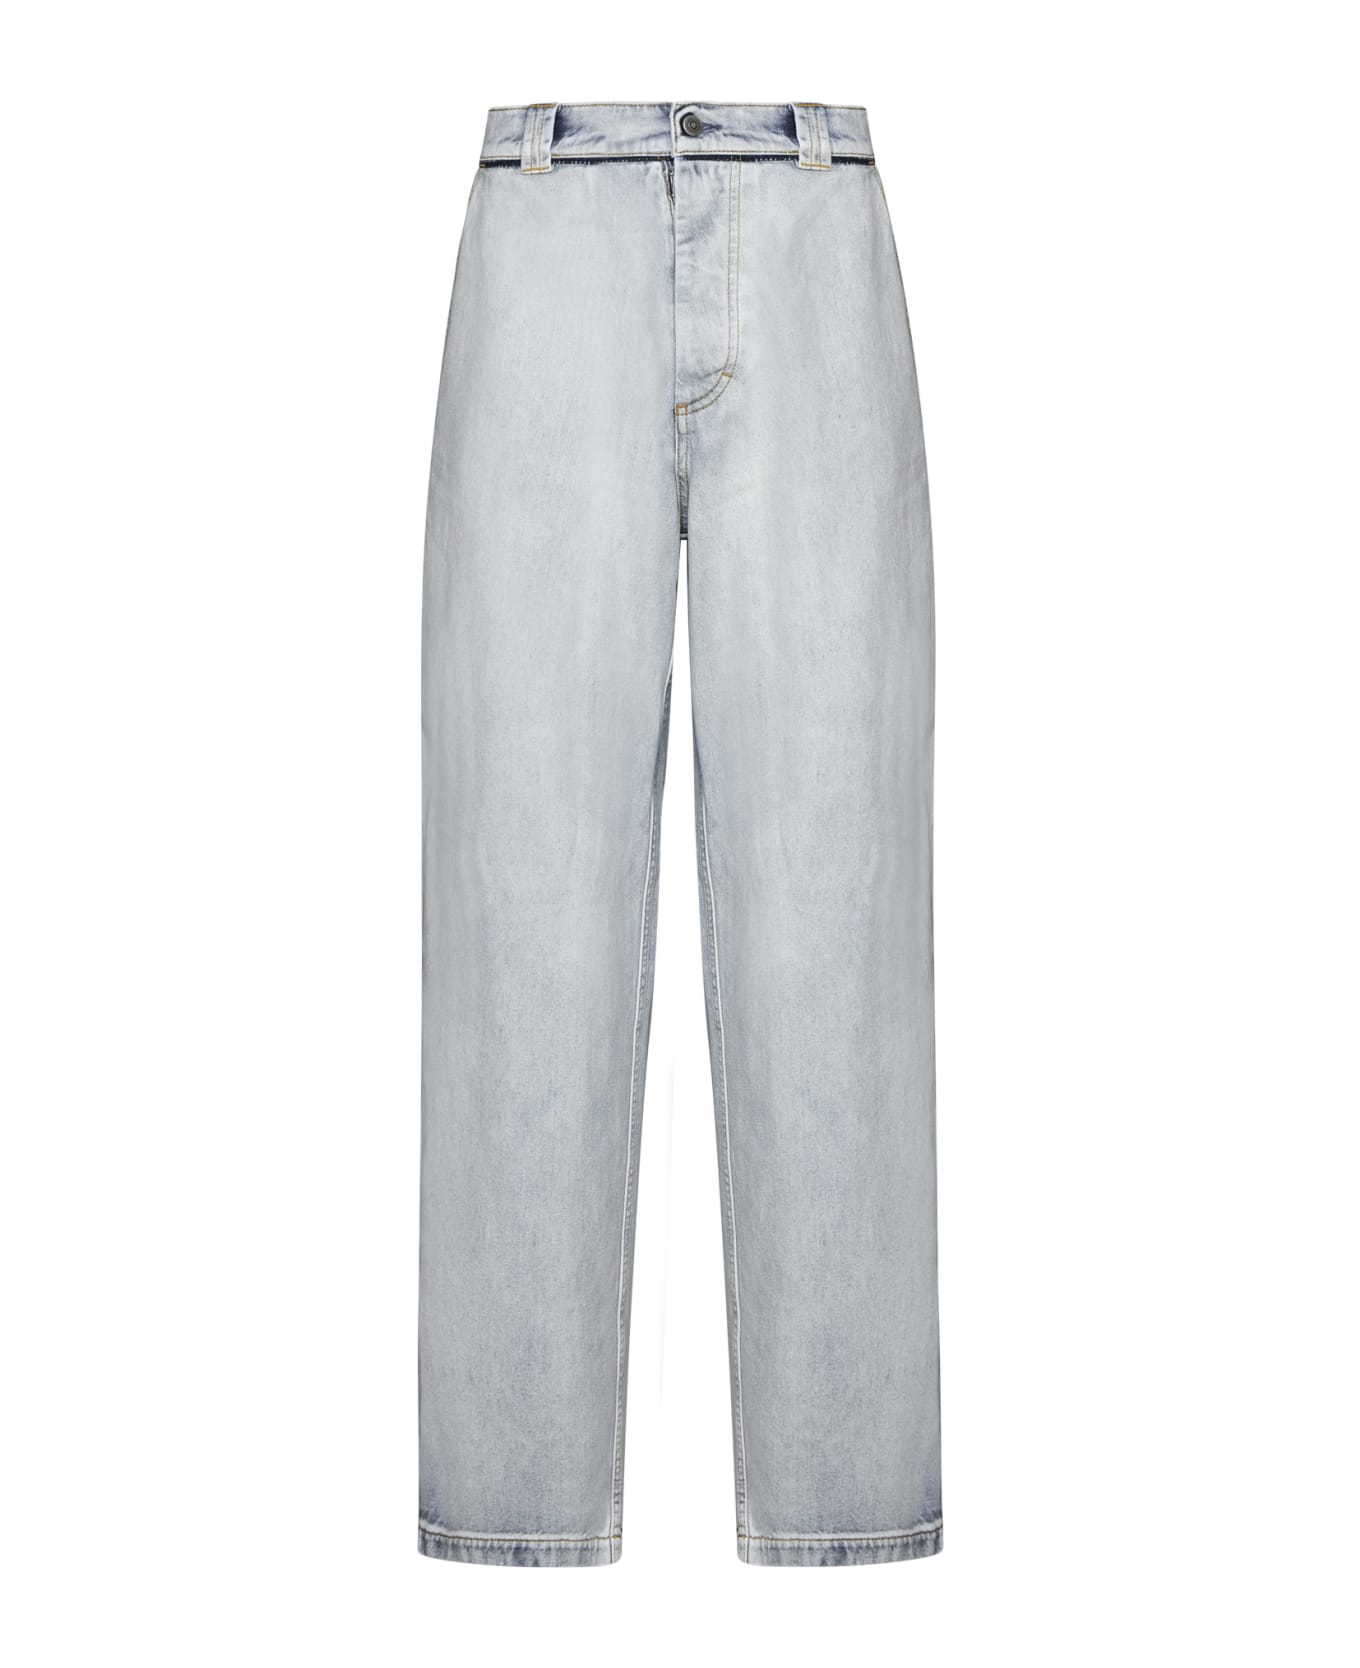 Maison Margiela Multi-pocket Jeans - Icy slip デニム